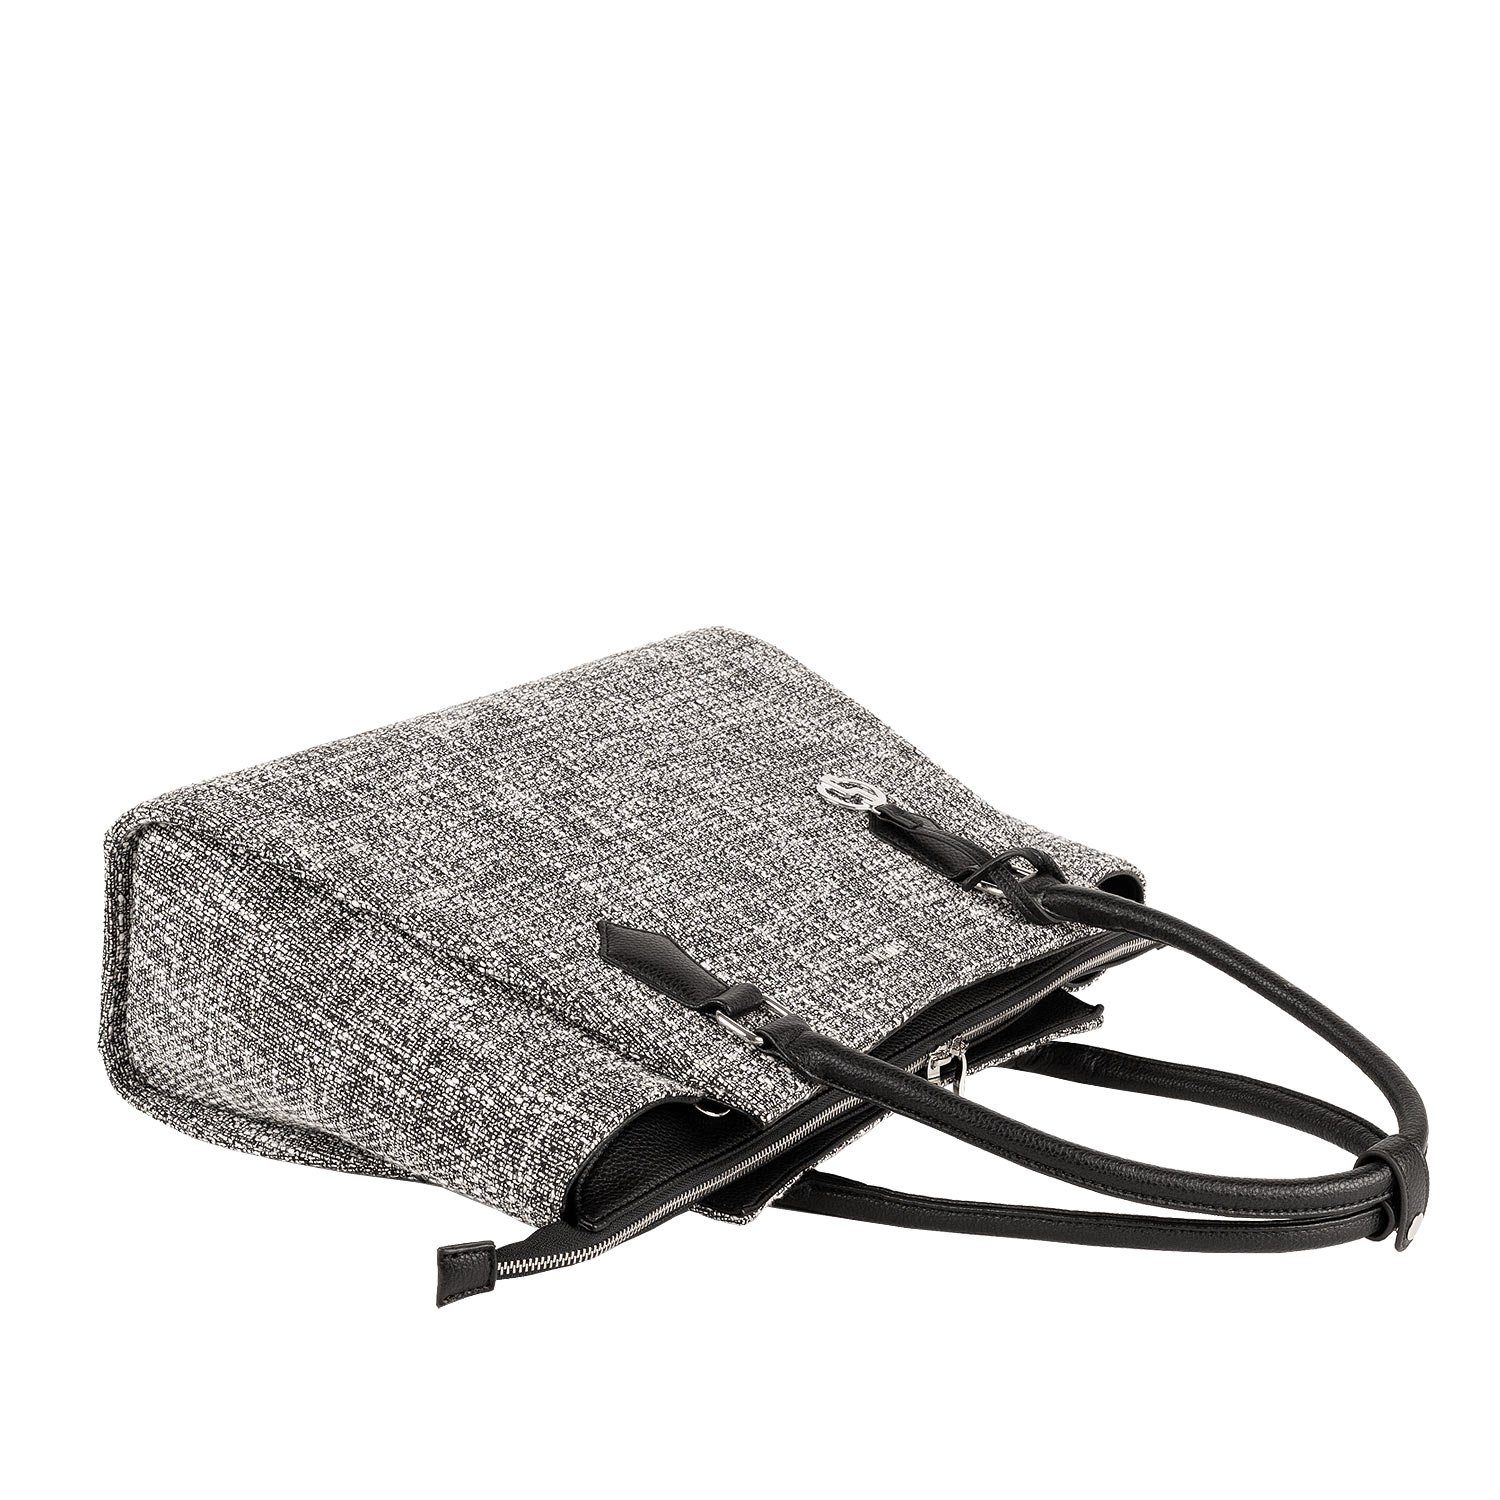 - grau Stoff SOCHA weiß Laptoptasche gewebt herausnehmbar - Caddy robuster Laptopfach Tweed,